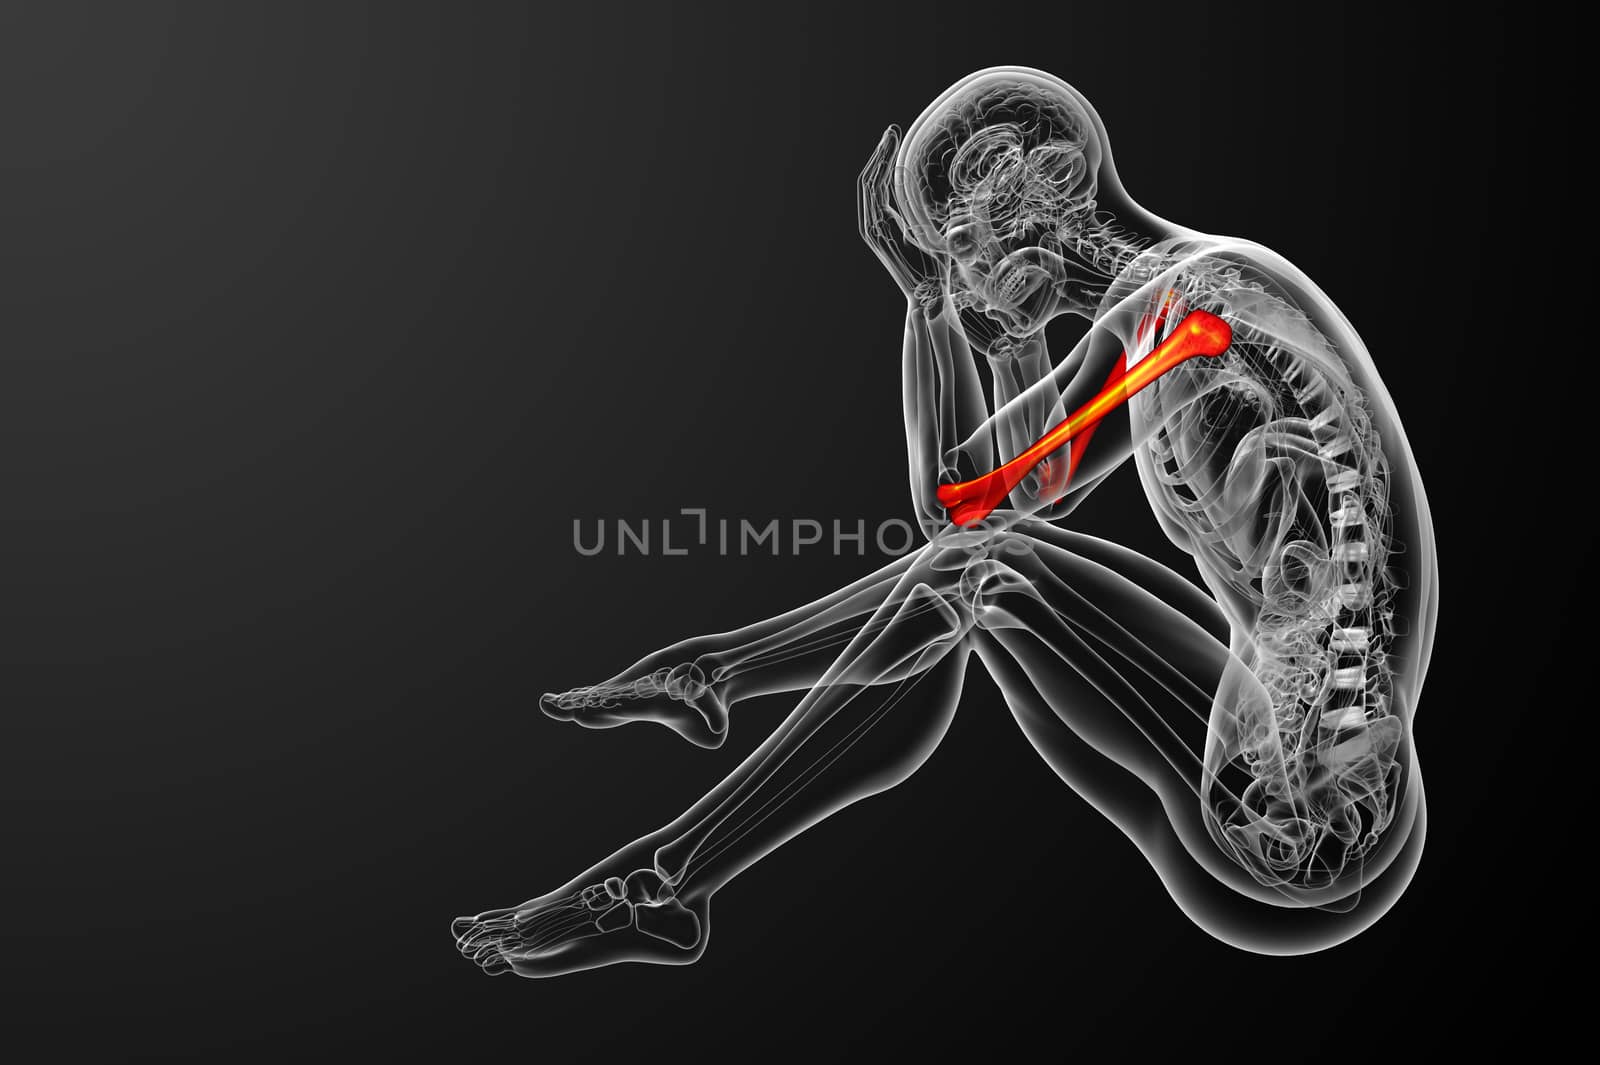 3d render medical illustration of the humerus bone